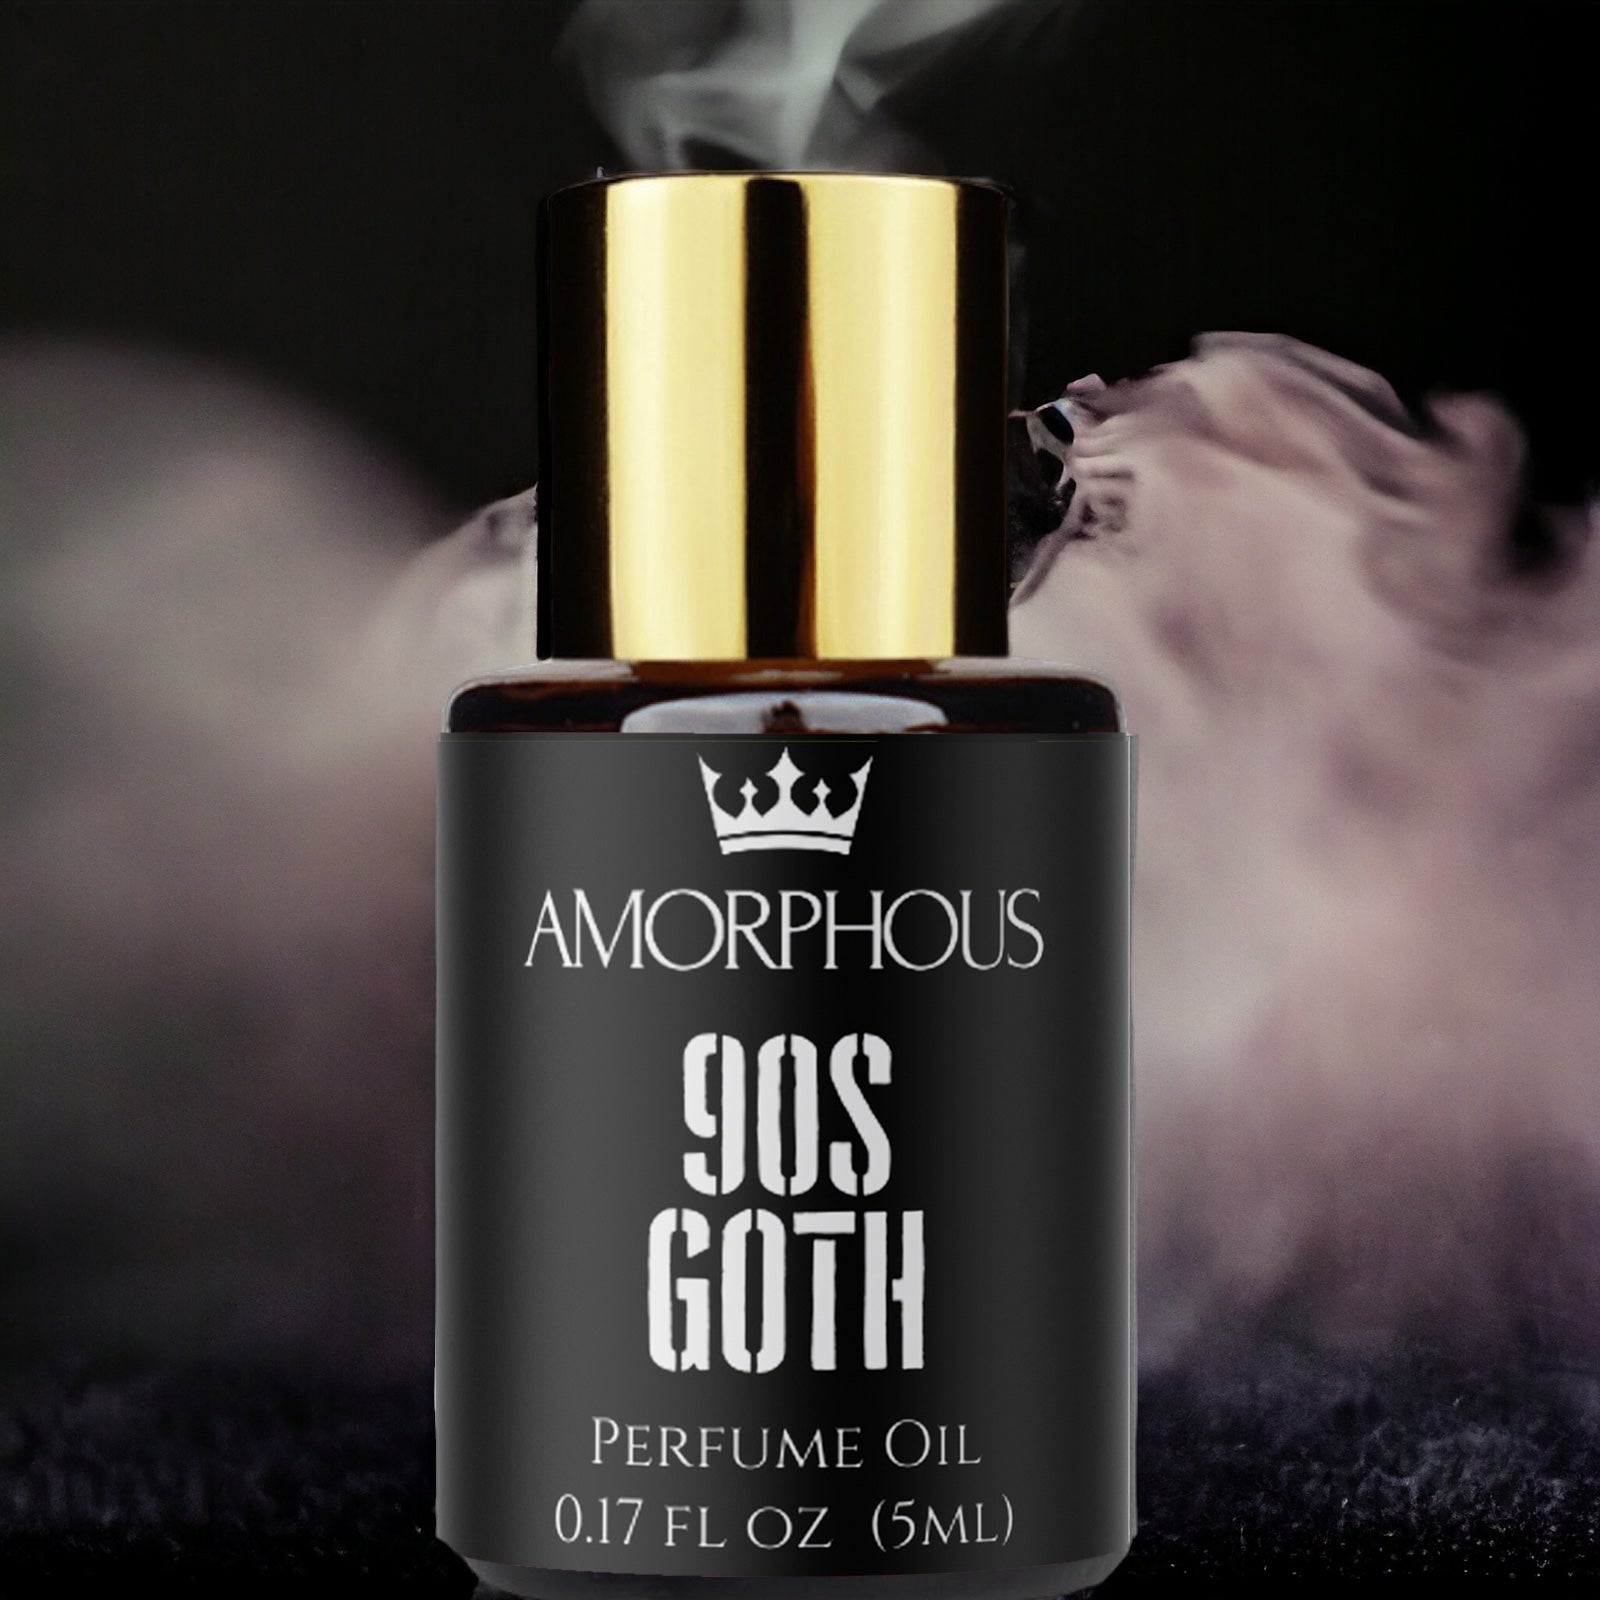 90s goth perfume